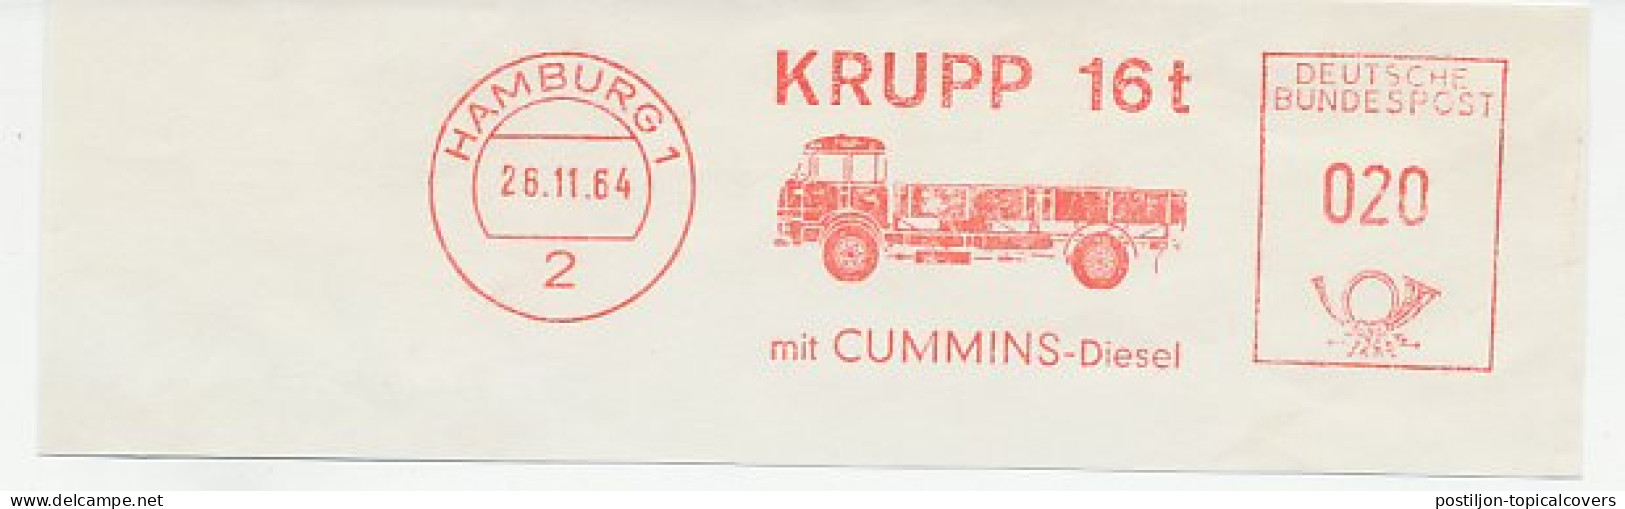 Meter Cut Germany 1964 Truck - Krupp - LKW